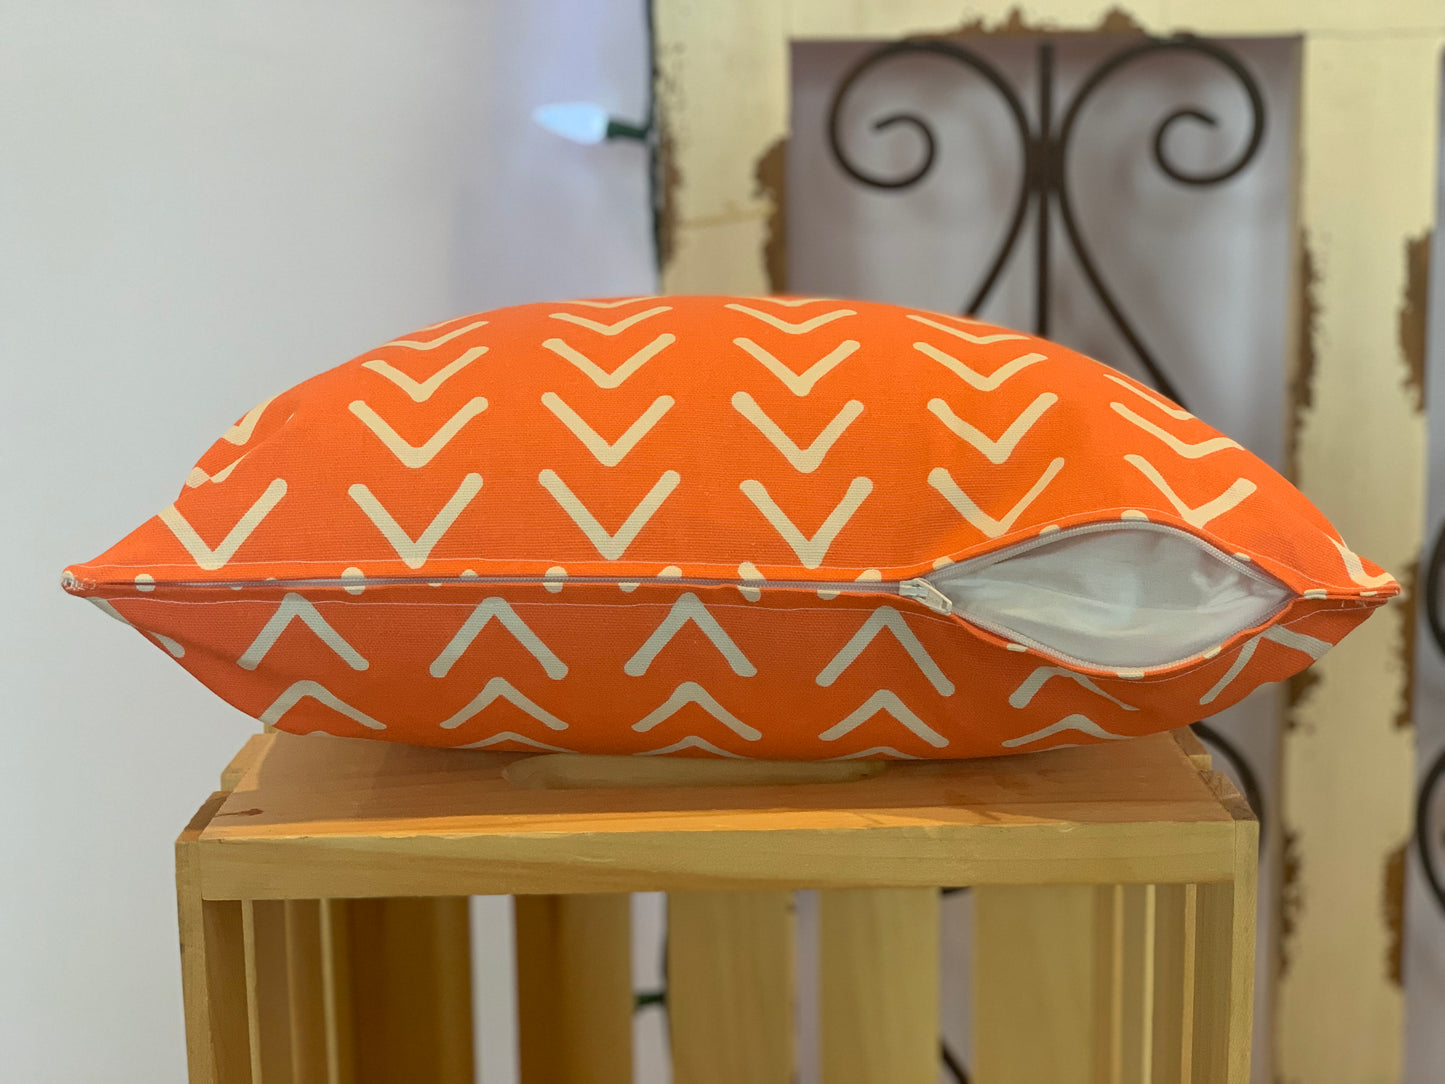 Lumbar (12" x 16") Orange and White Pillow Covers - InRugCo Studio & Gift Shop